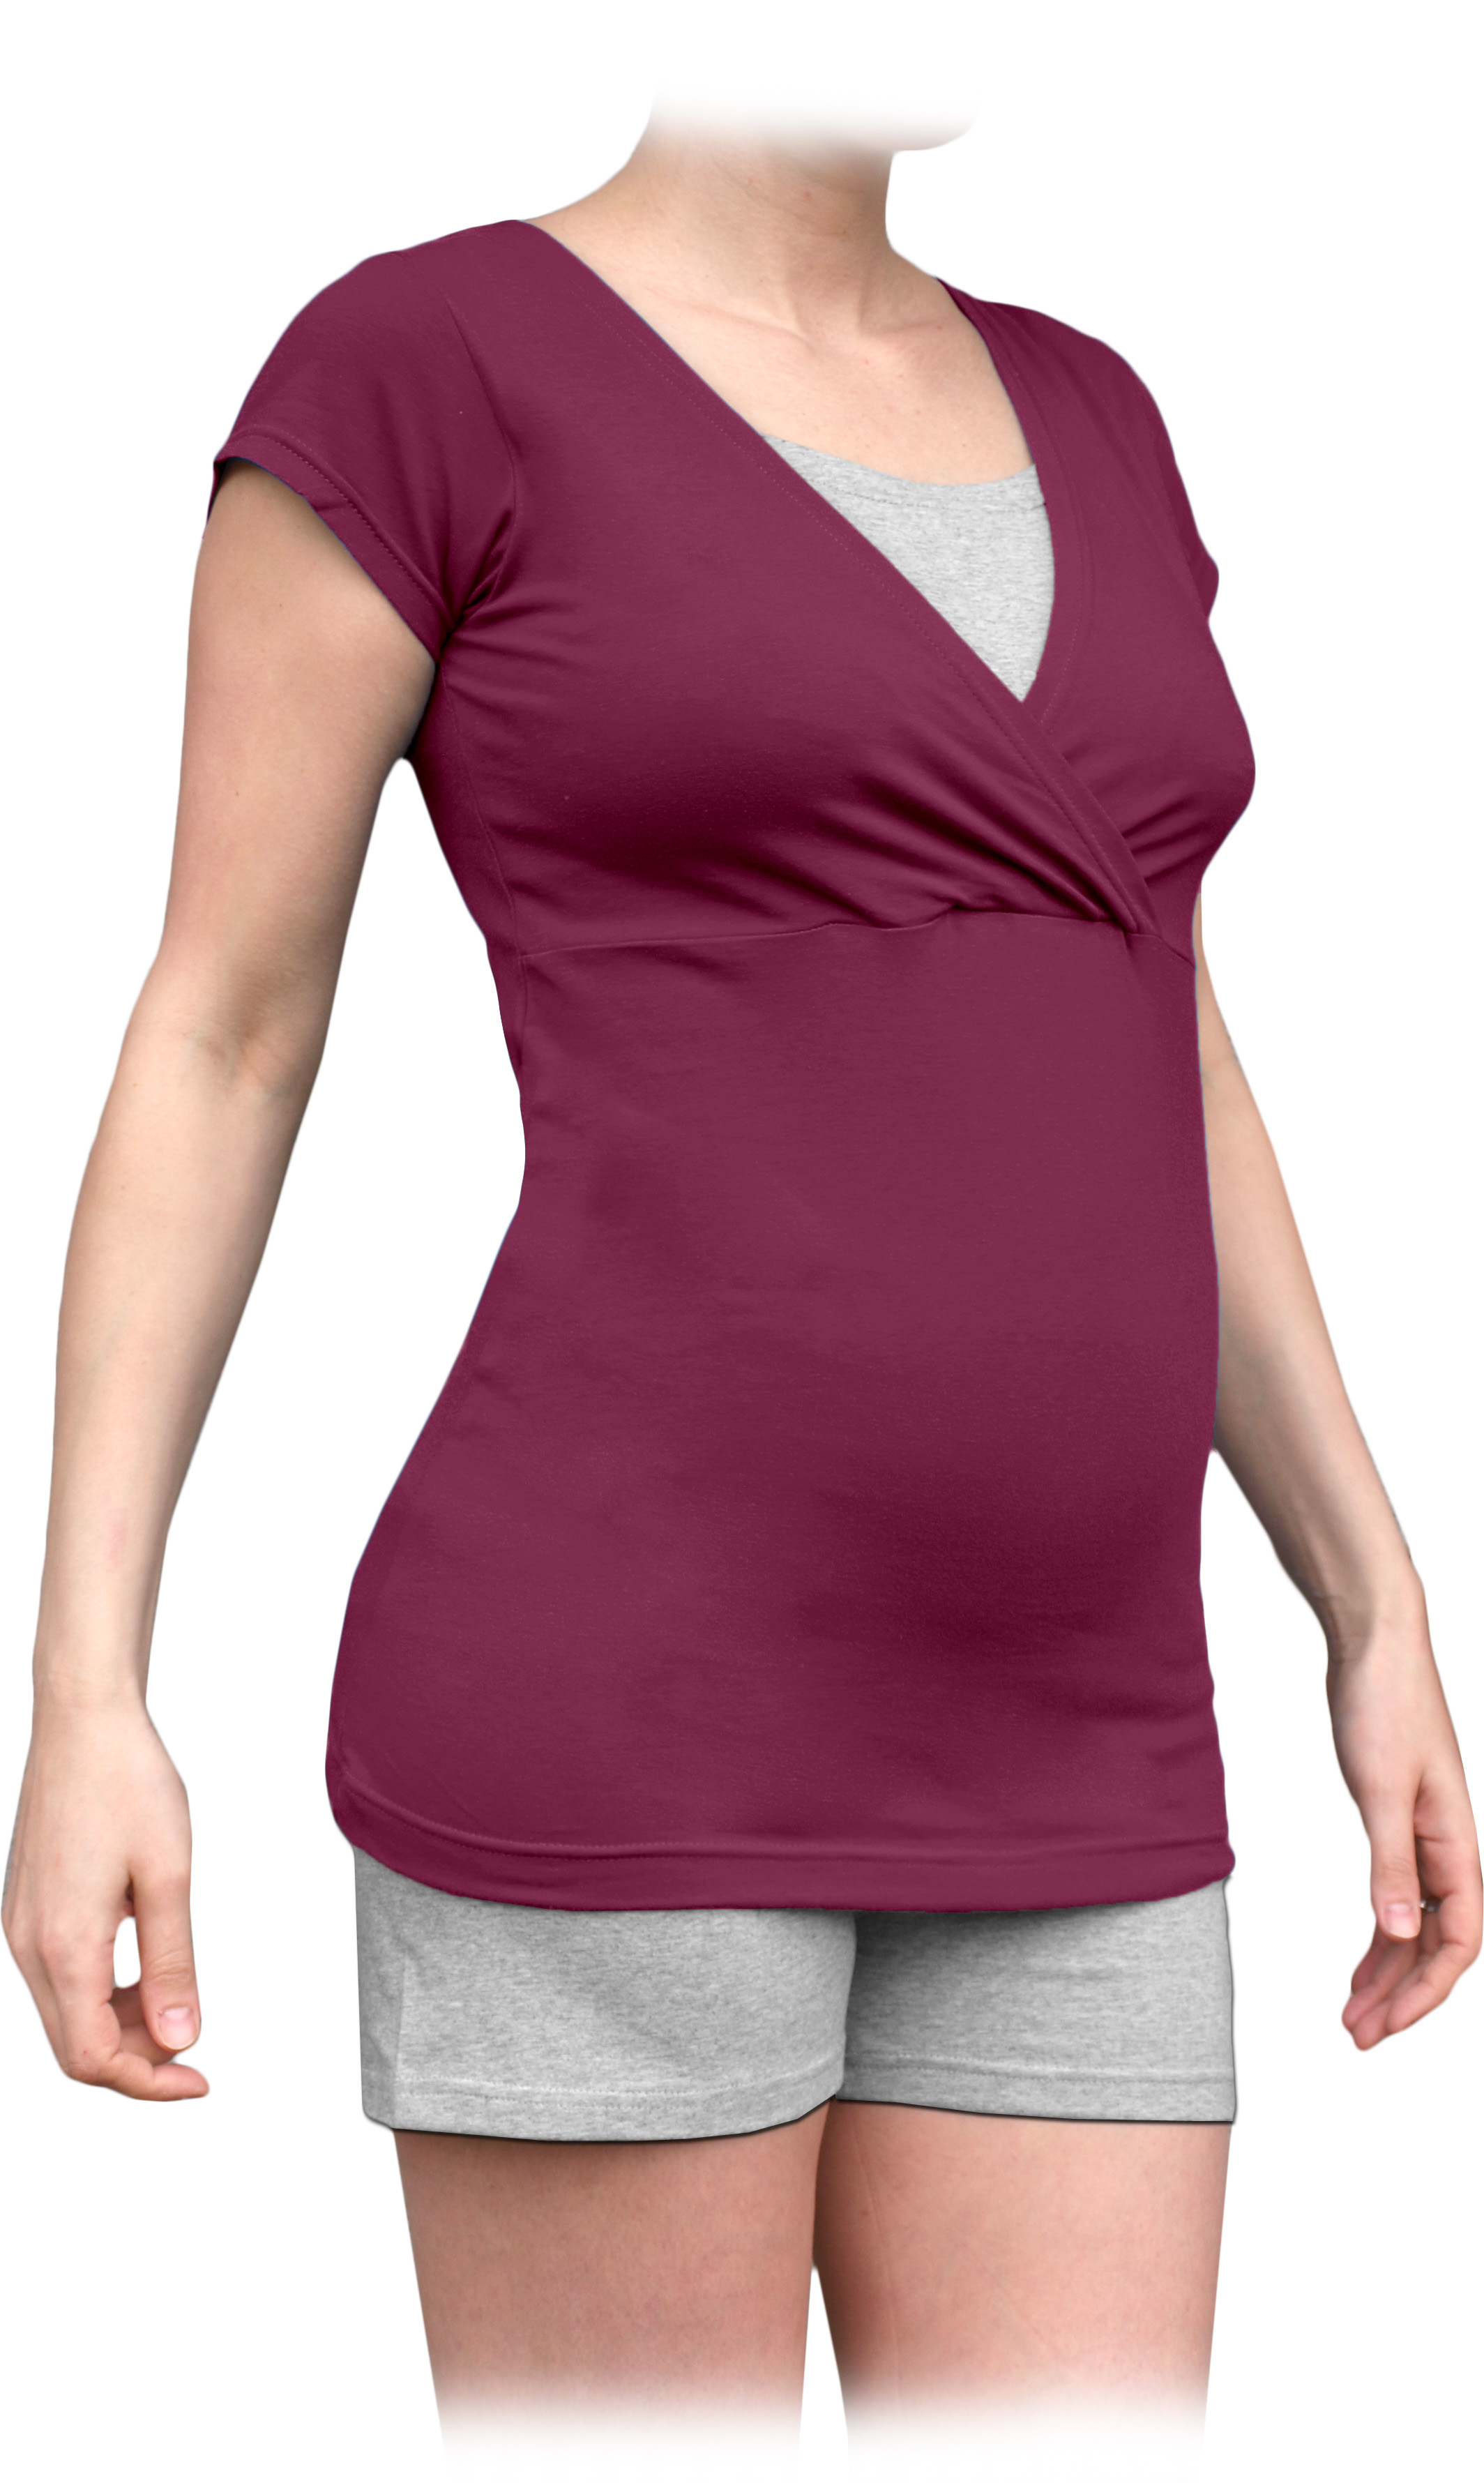 Tehotenské a dojčiace pyžamo, krátke, cyklamen + sivý melír